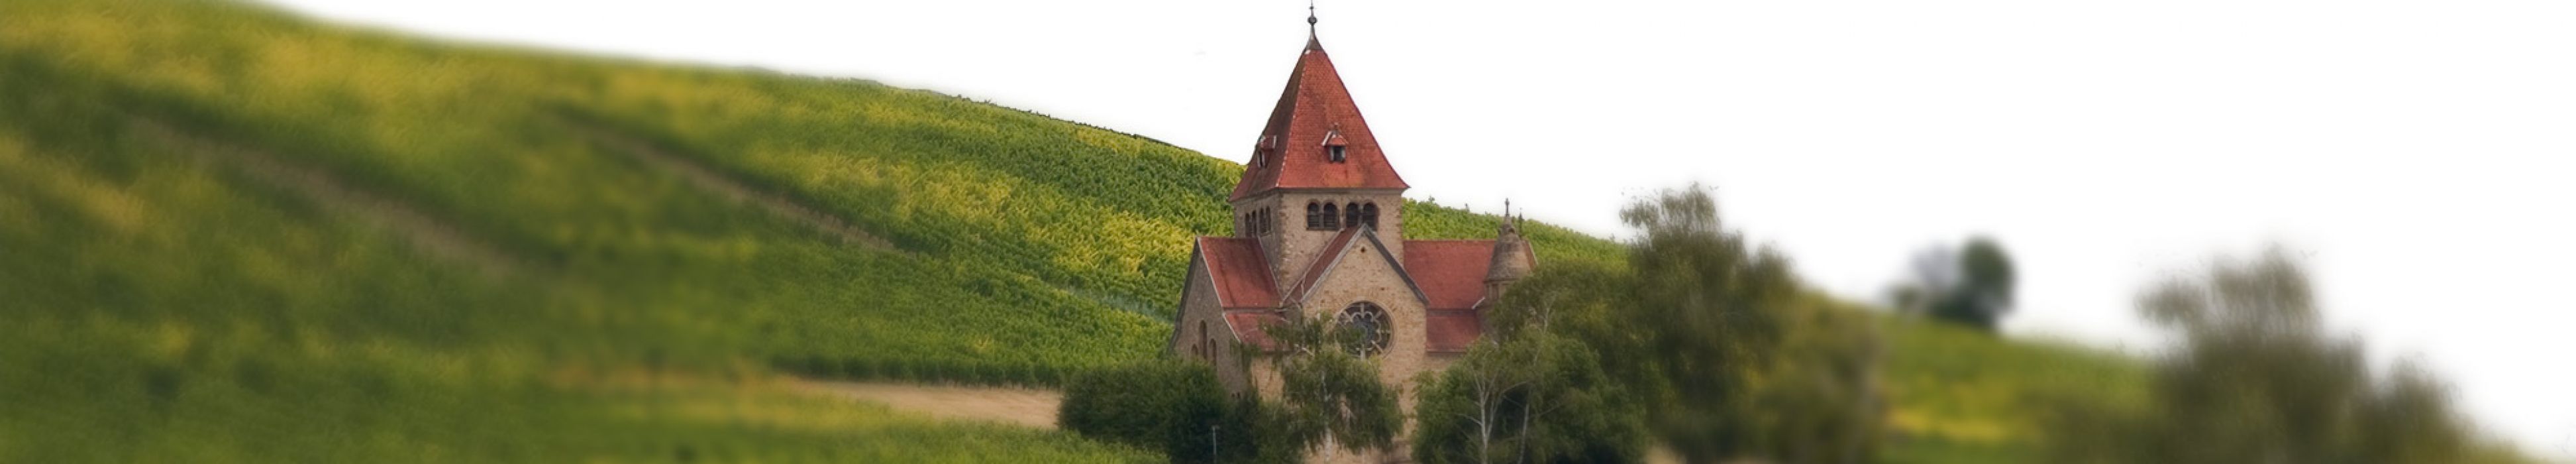 Kreuzkapelle Gau Bickelheim